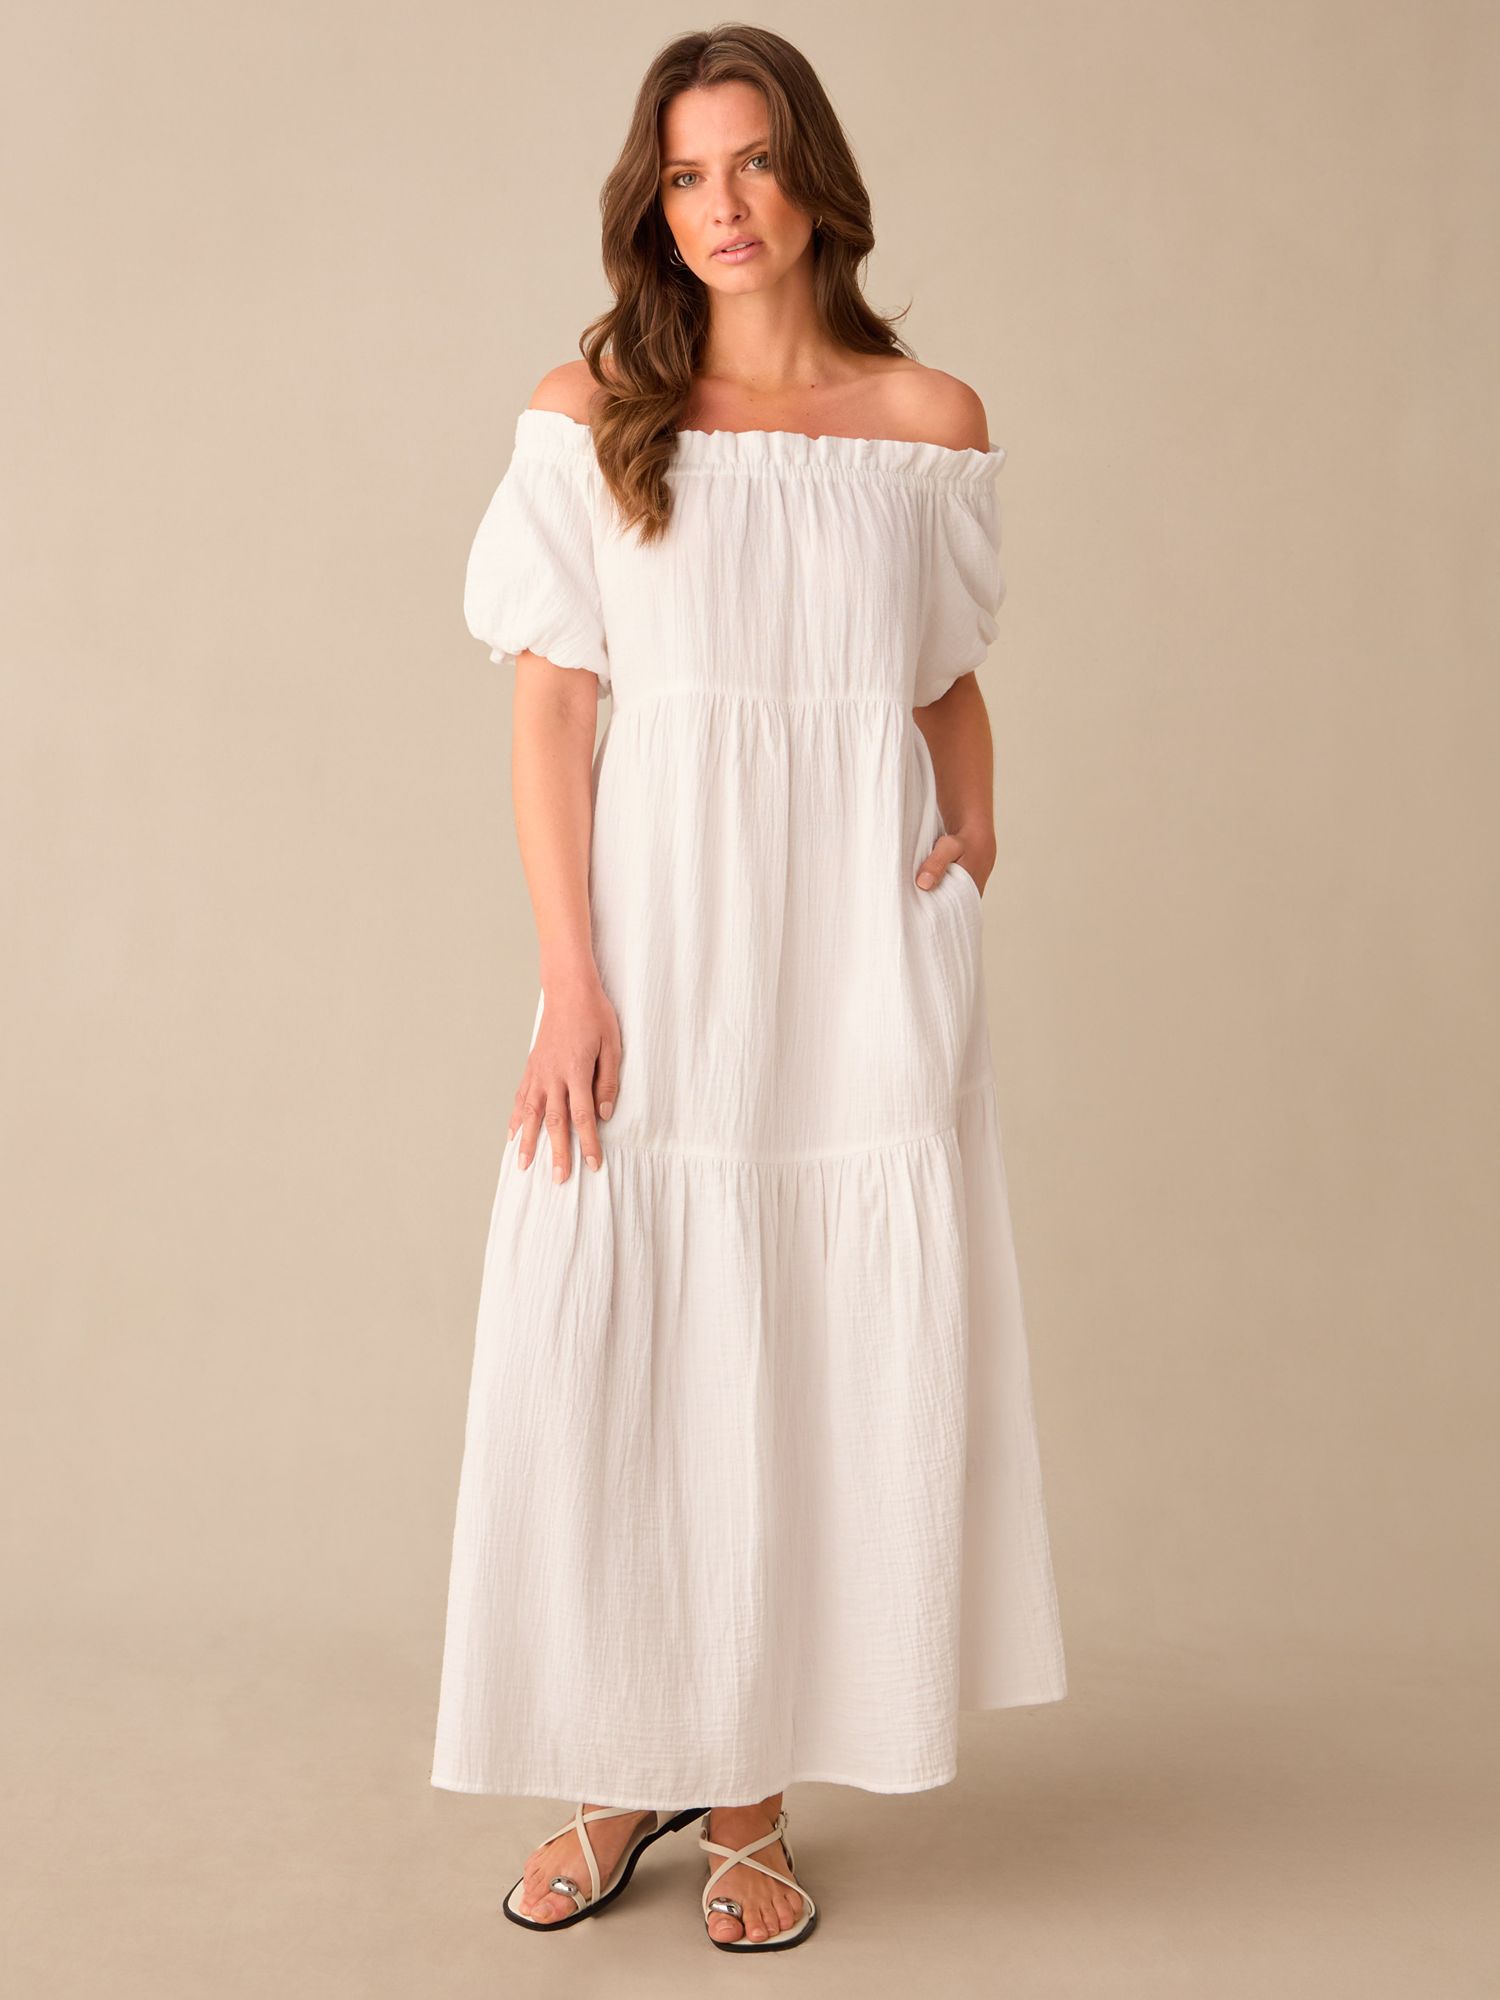 Ro&Zo Petite Frill Detail Cheesecloth Dress, White, 6